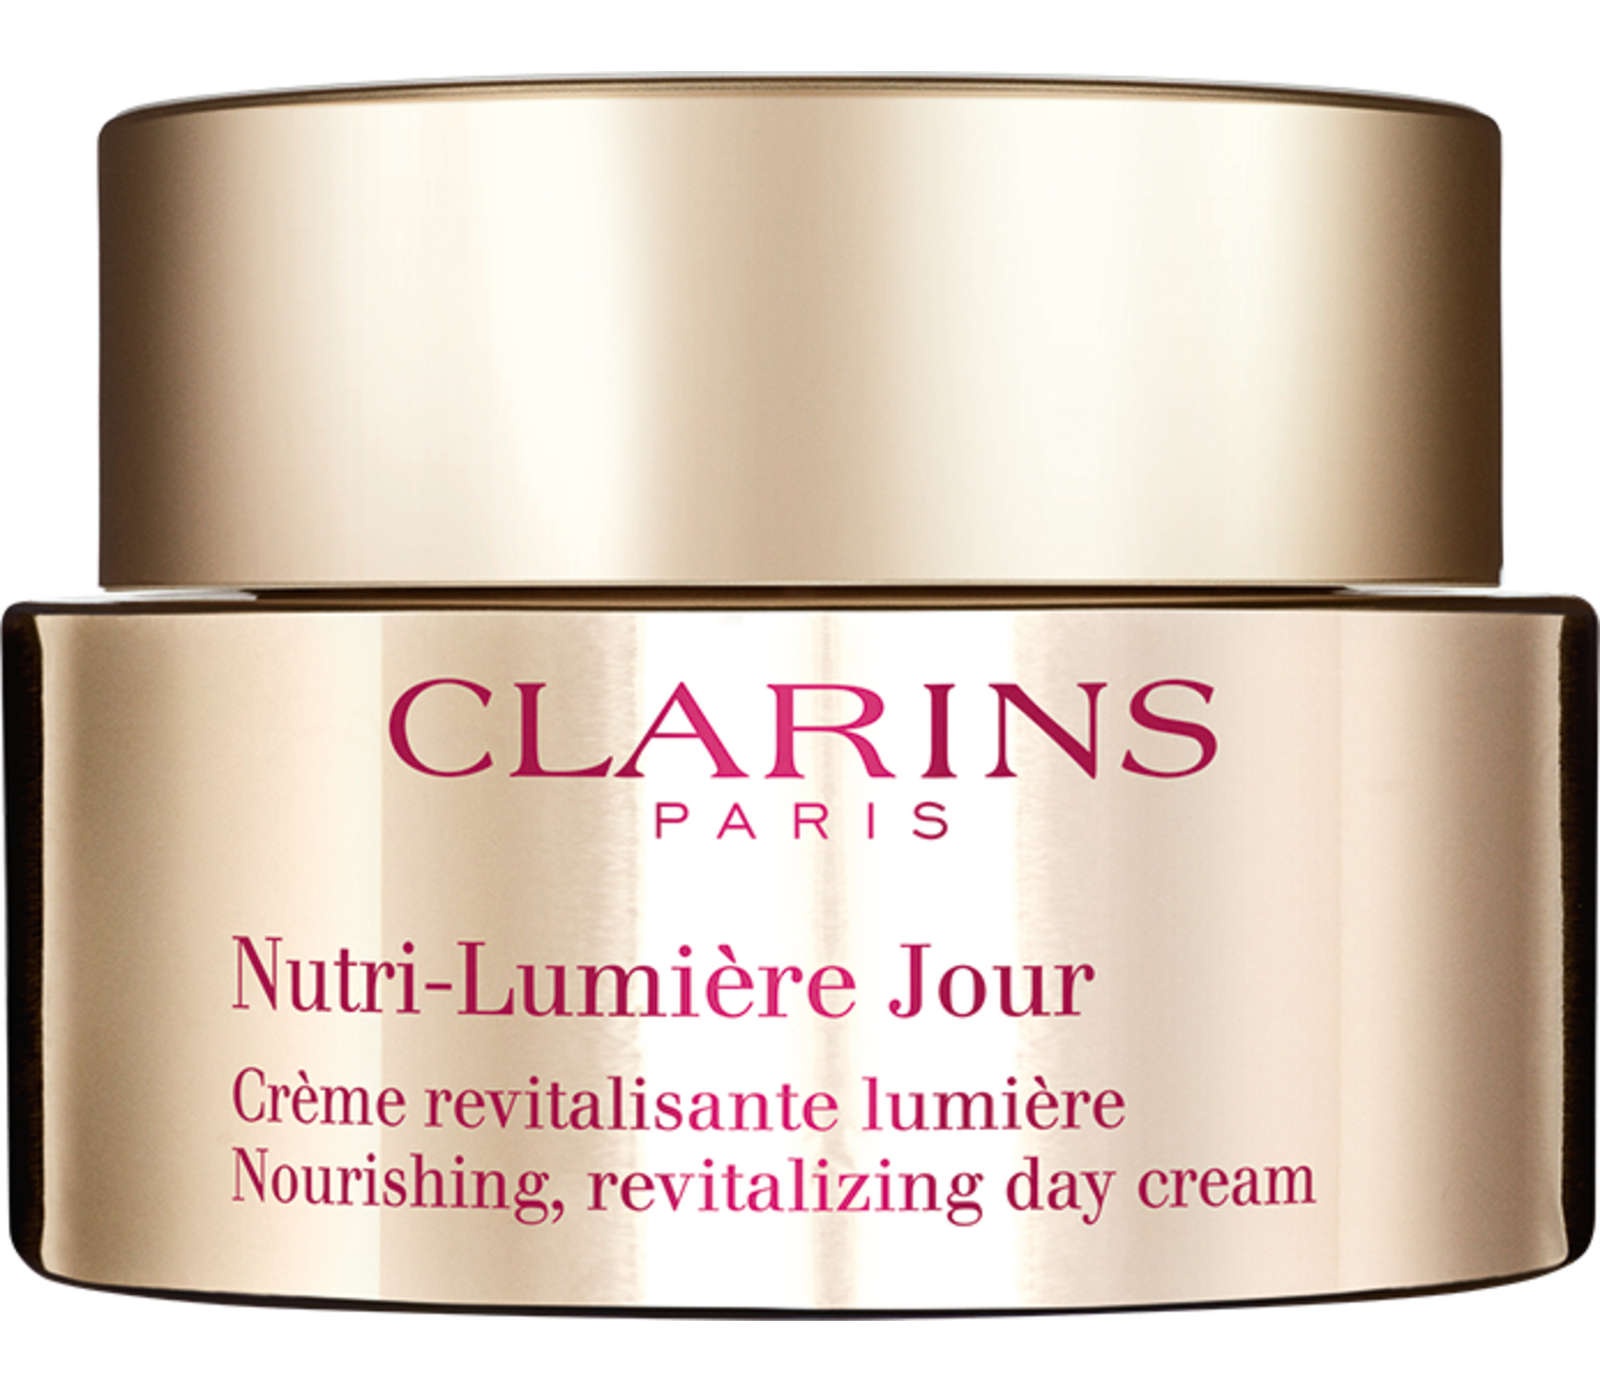 Clarins Nutri-Lumière Day Cream